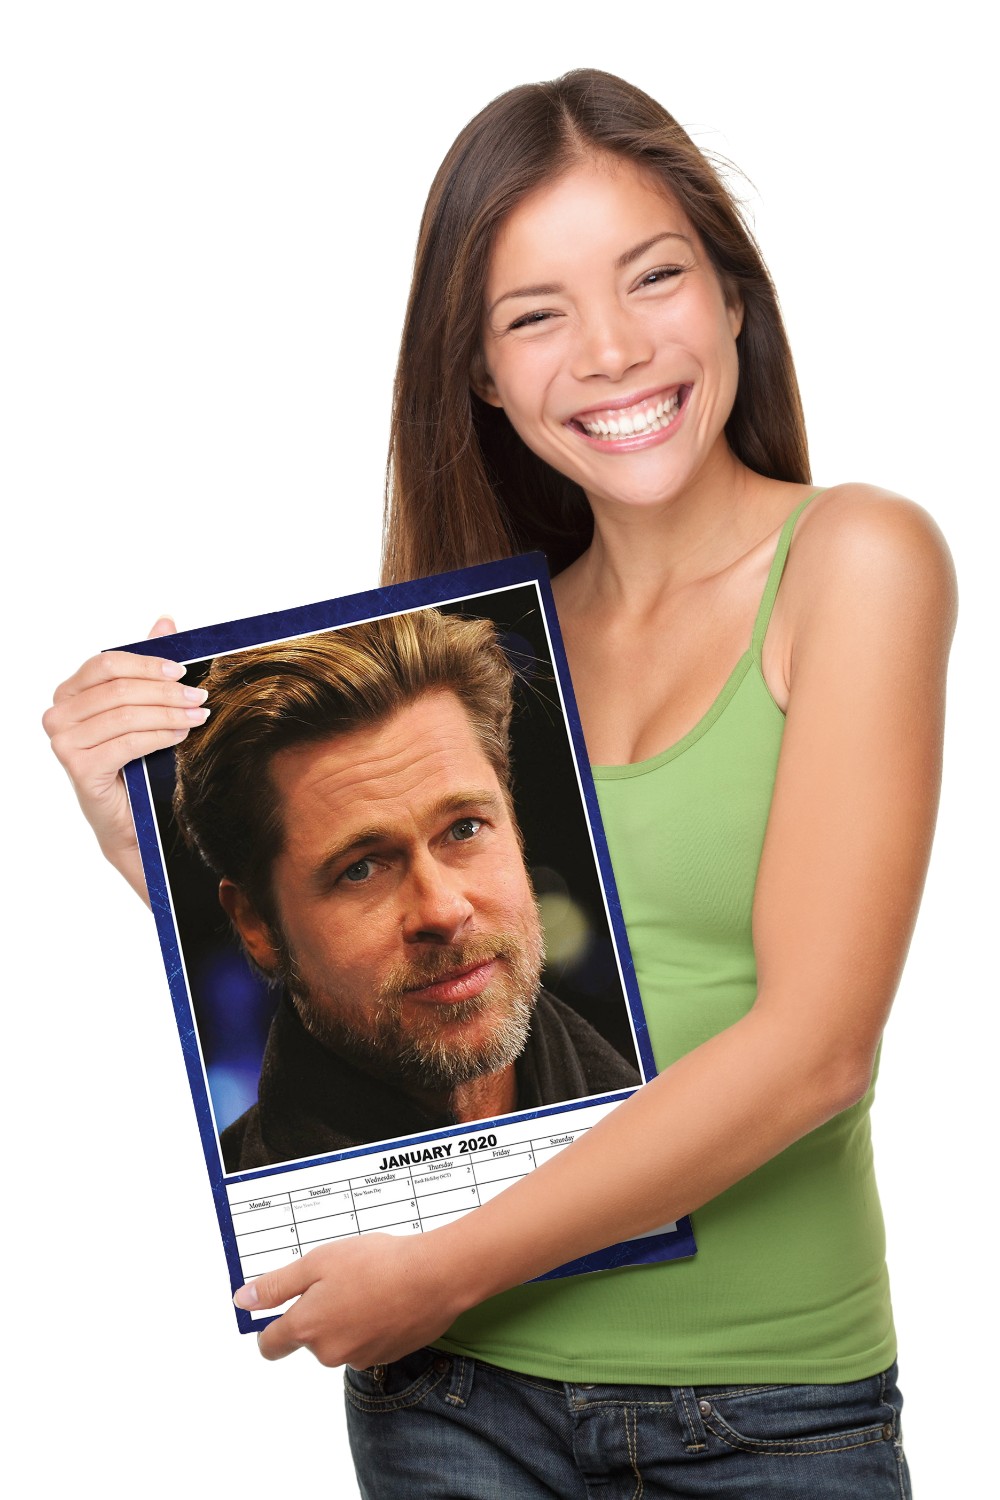 Brad Pitt Celebrity Wall Calendar 2020 | eBay